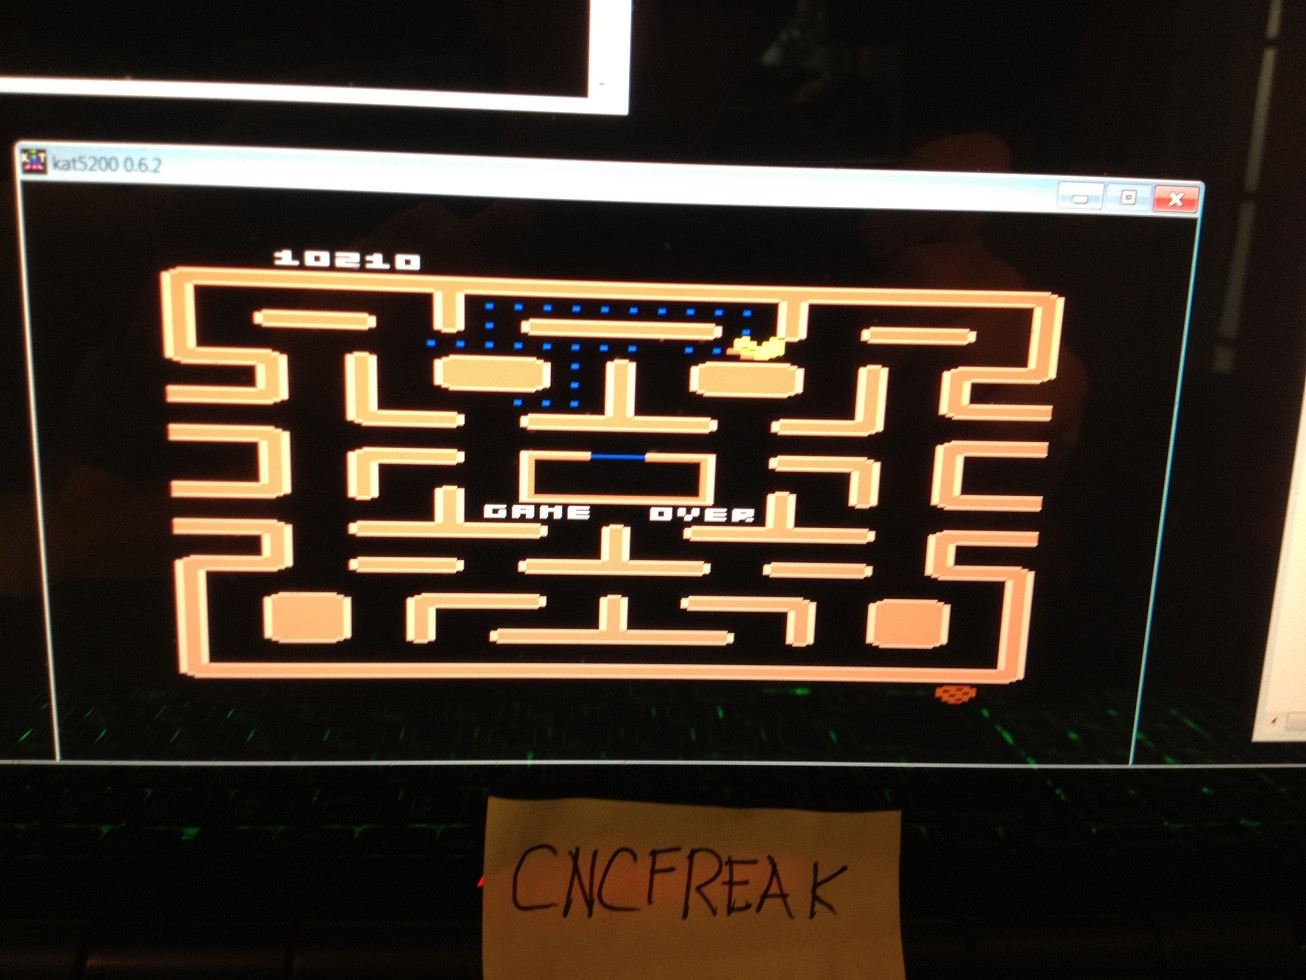 cncfreak: Ms. Pac-Man: Cherries Start (Atari 5200 Emulated) 10,210 points on 2013-10-14 16:46:15